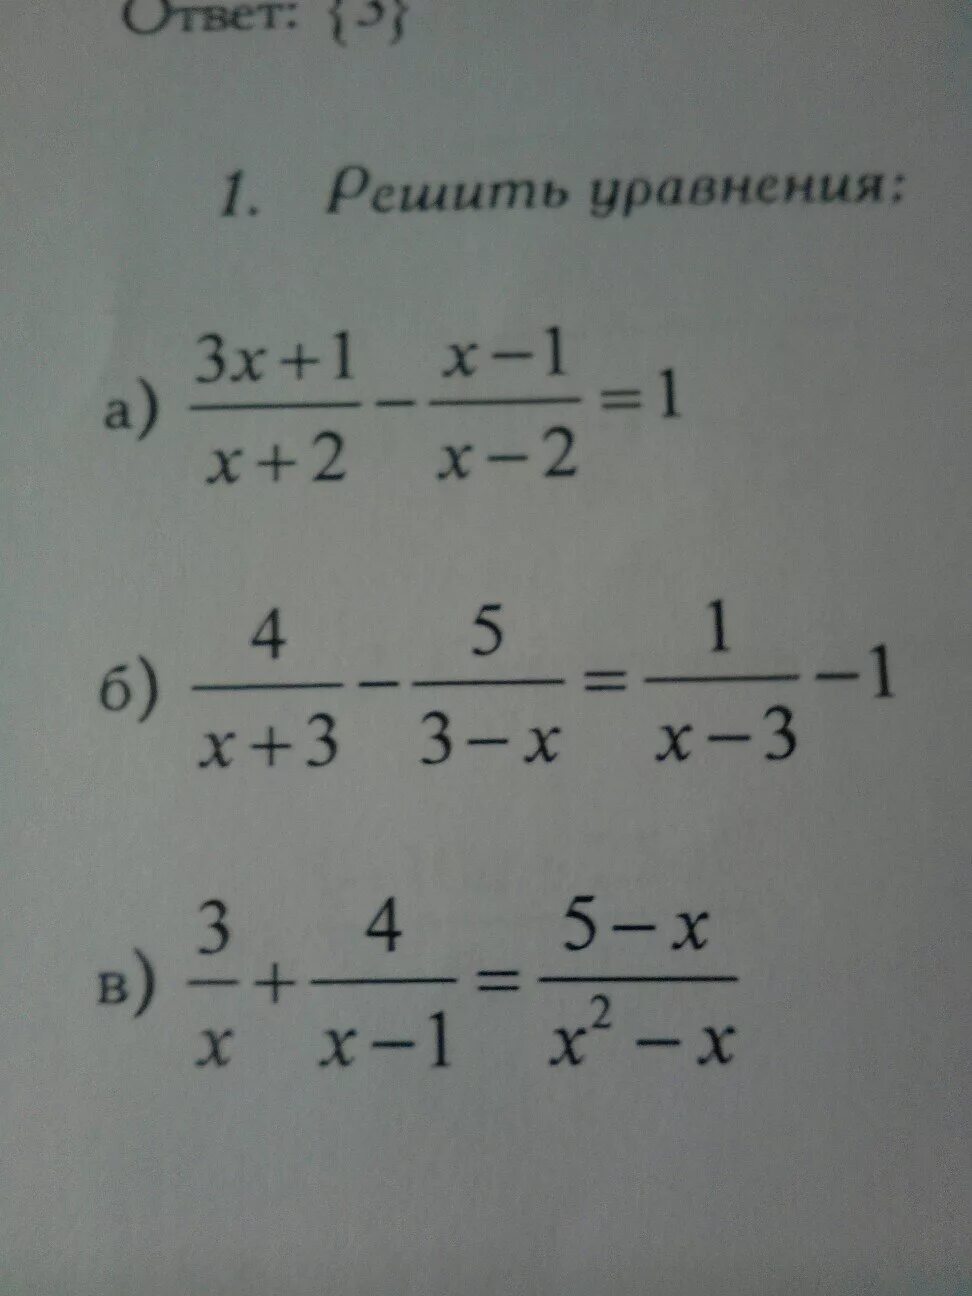 2x 1x 3x 4. X1+2x2+3x3. 3x+1. X-1/2=4+5x/3. 3x-1=1.